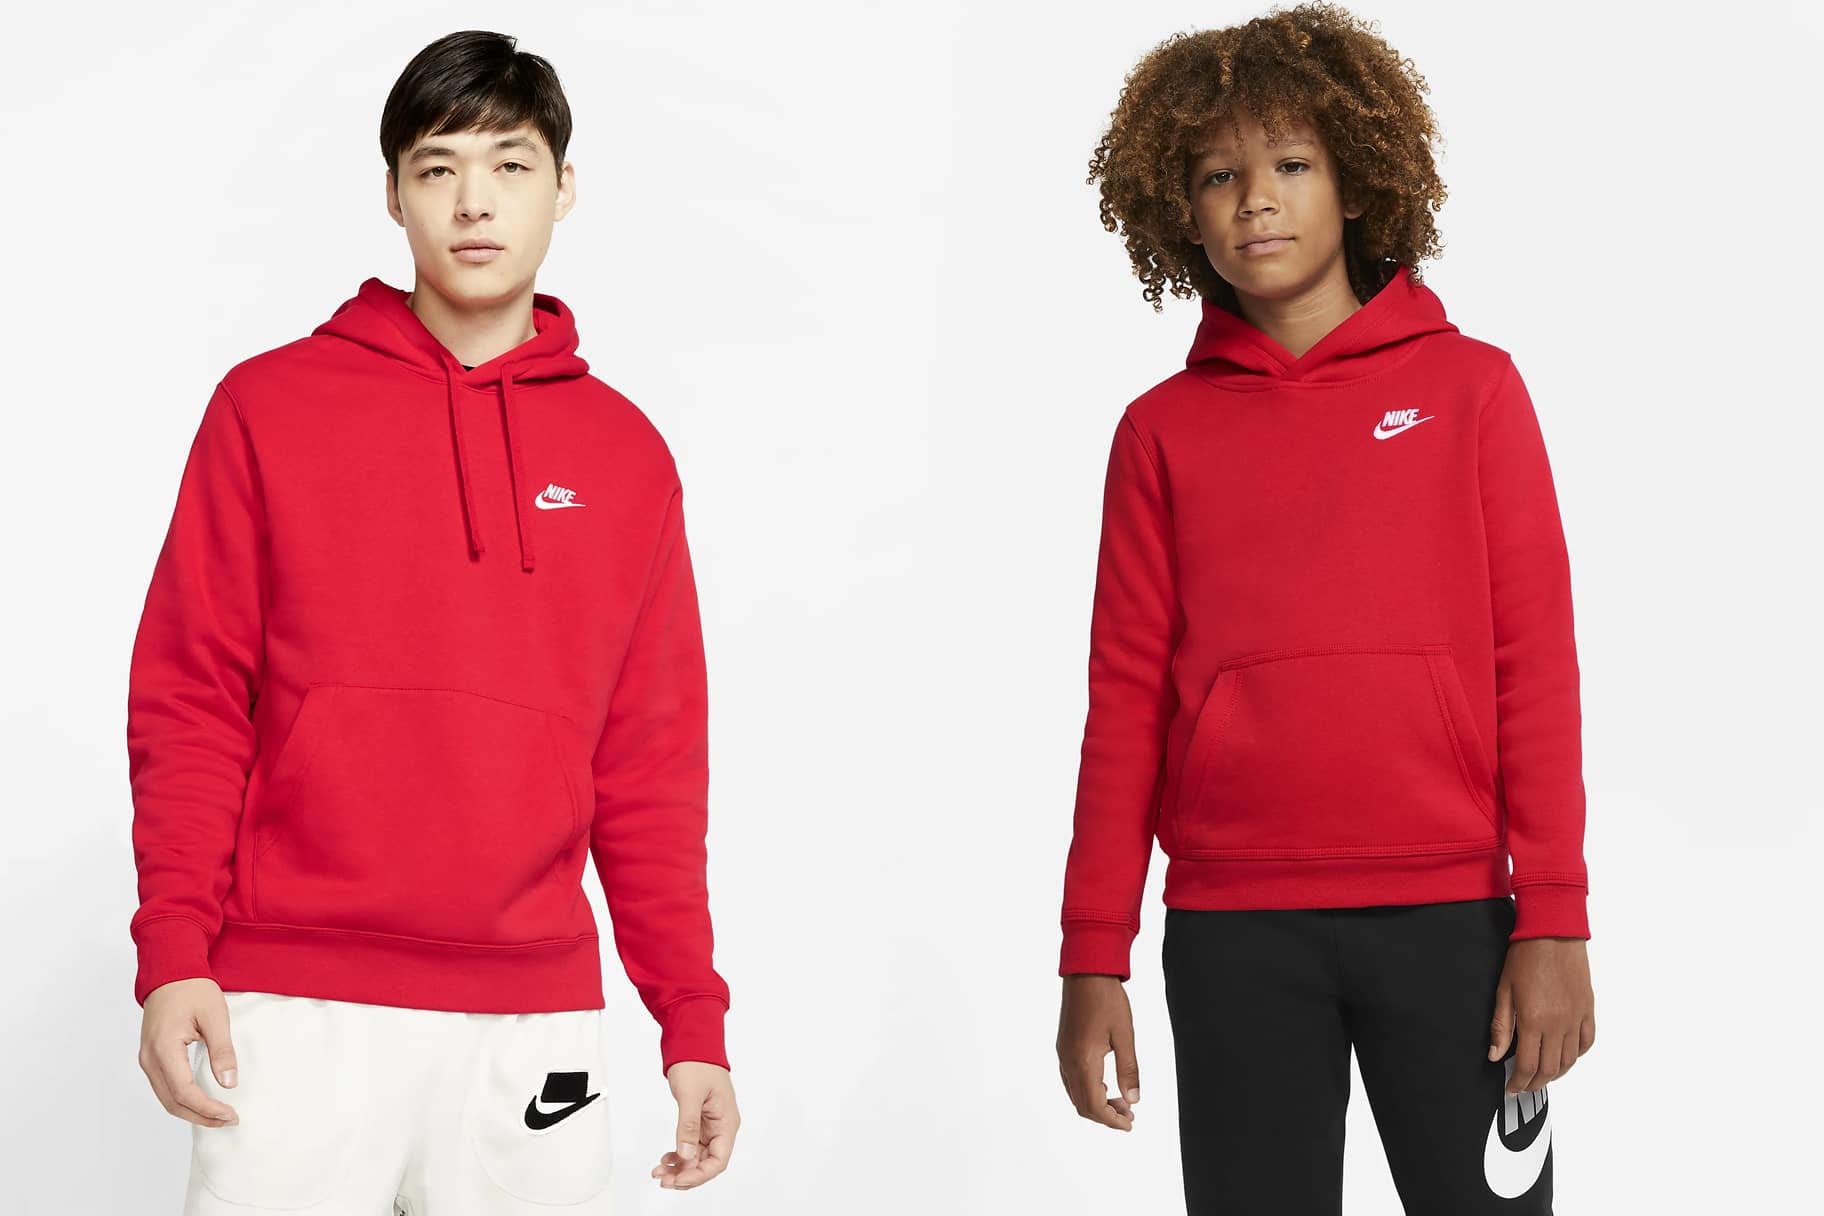 Zeeziekte Betasten Macadam Shop Matching Nike Outfits for the Whole Family. Nike.com